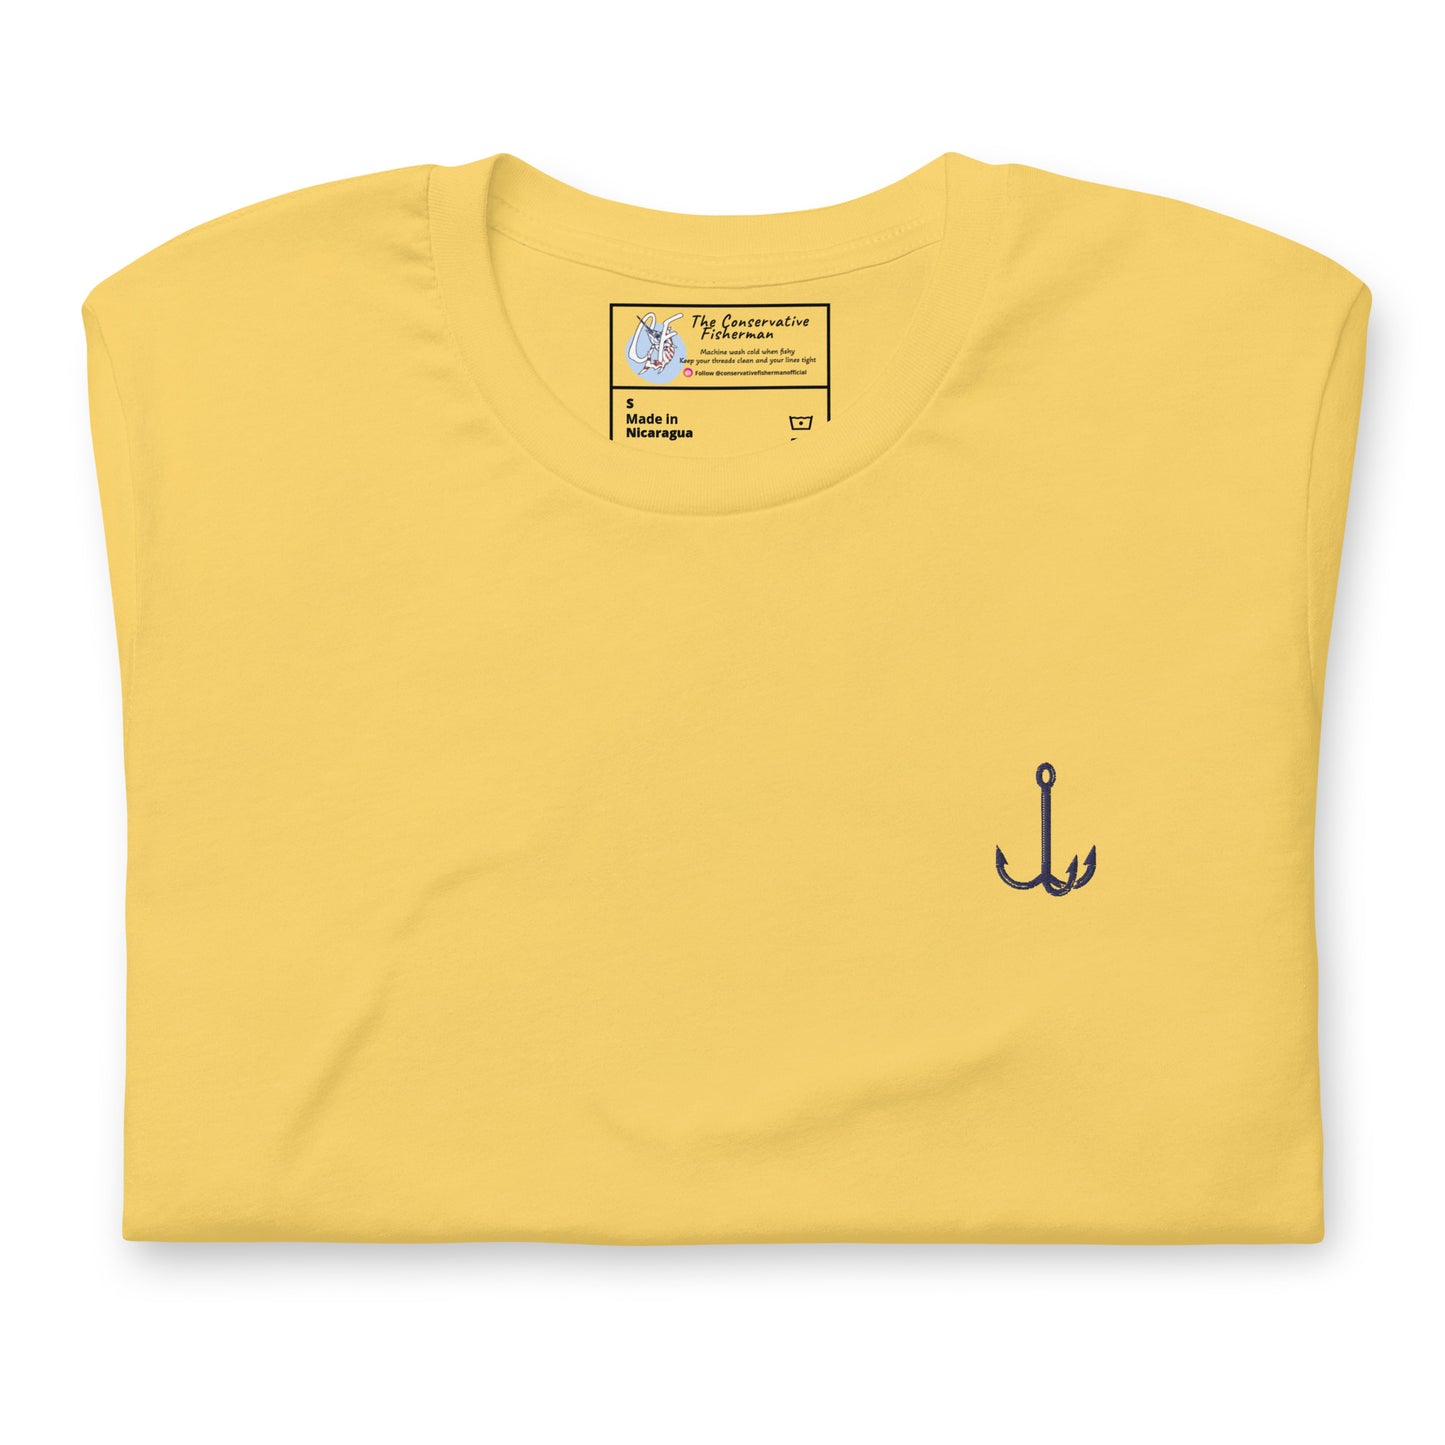 'Treble Hook' Premium Embroidered Shirt